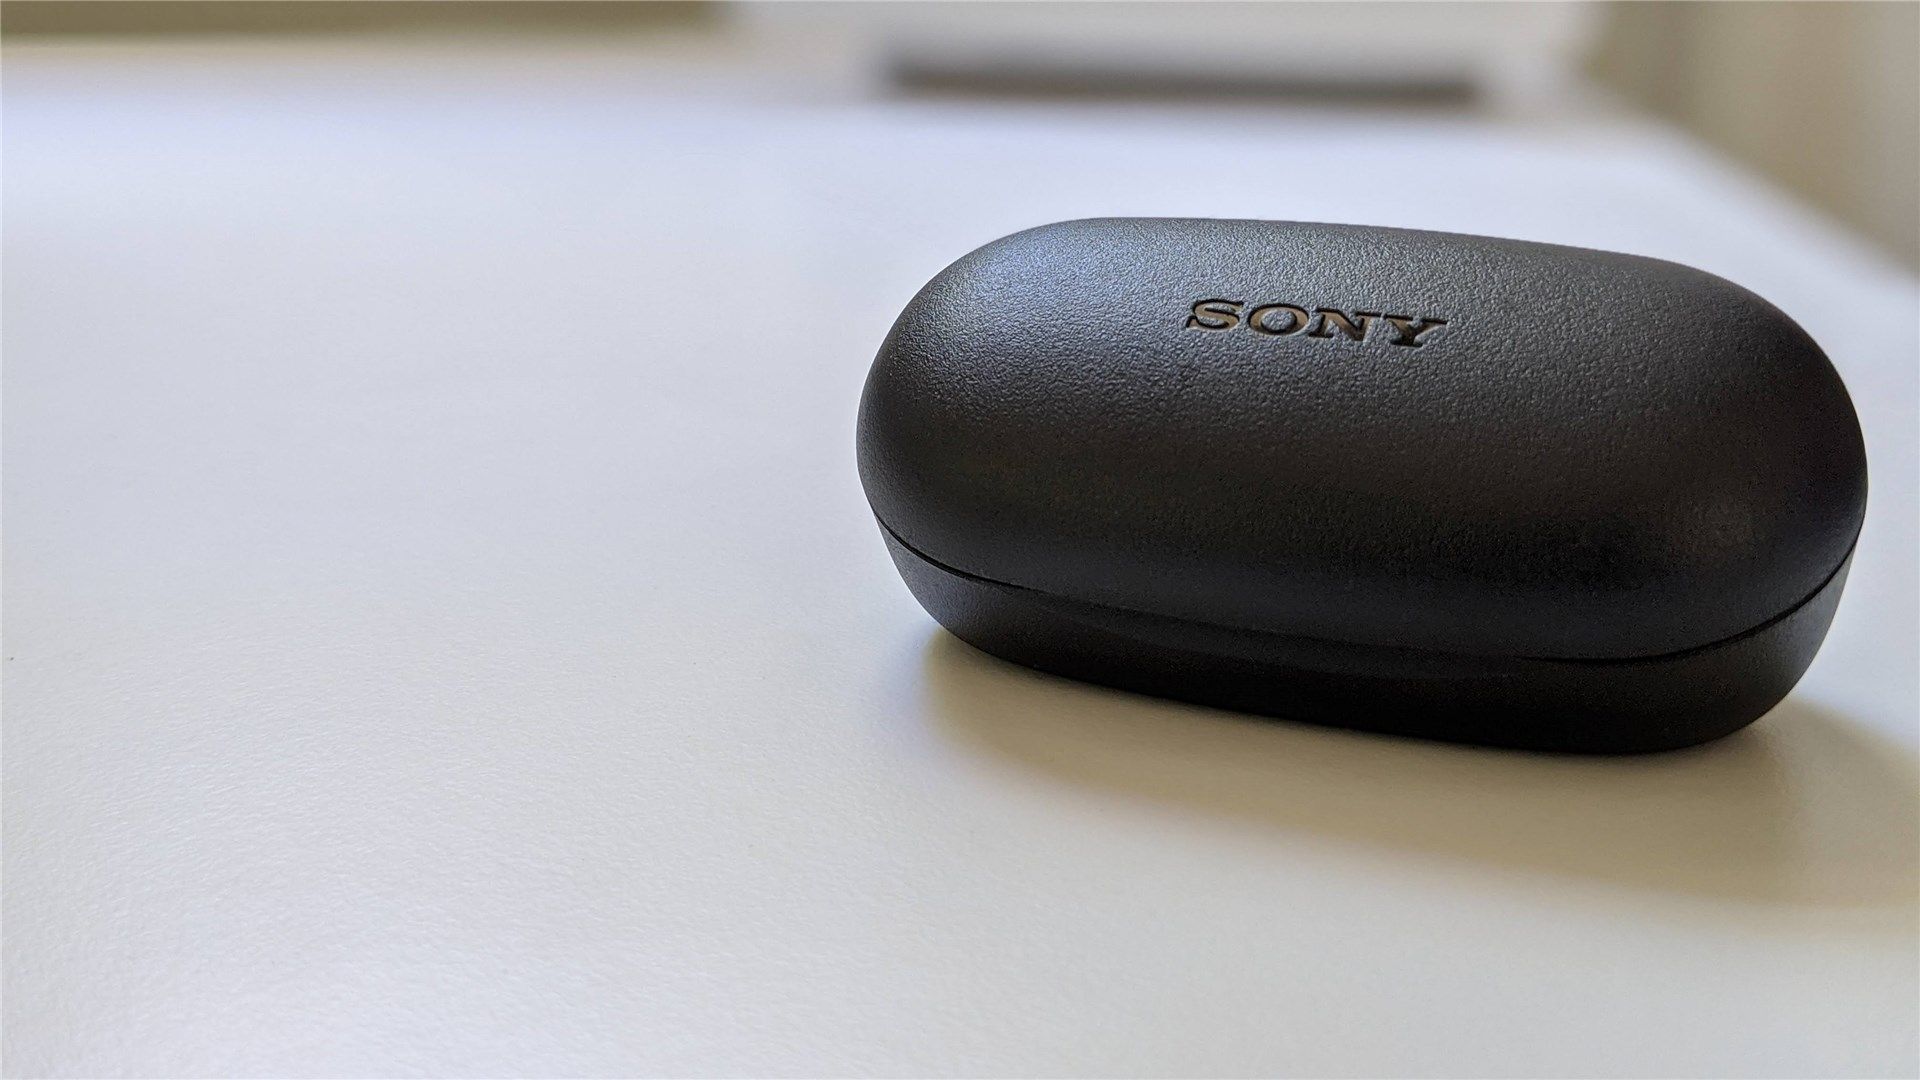 The Sony Extra Bass true wireless case